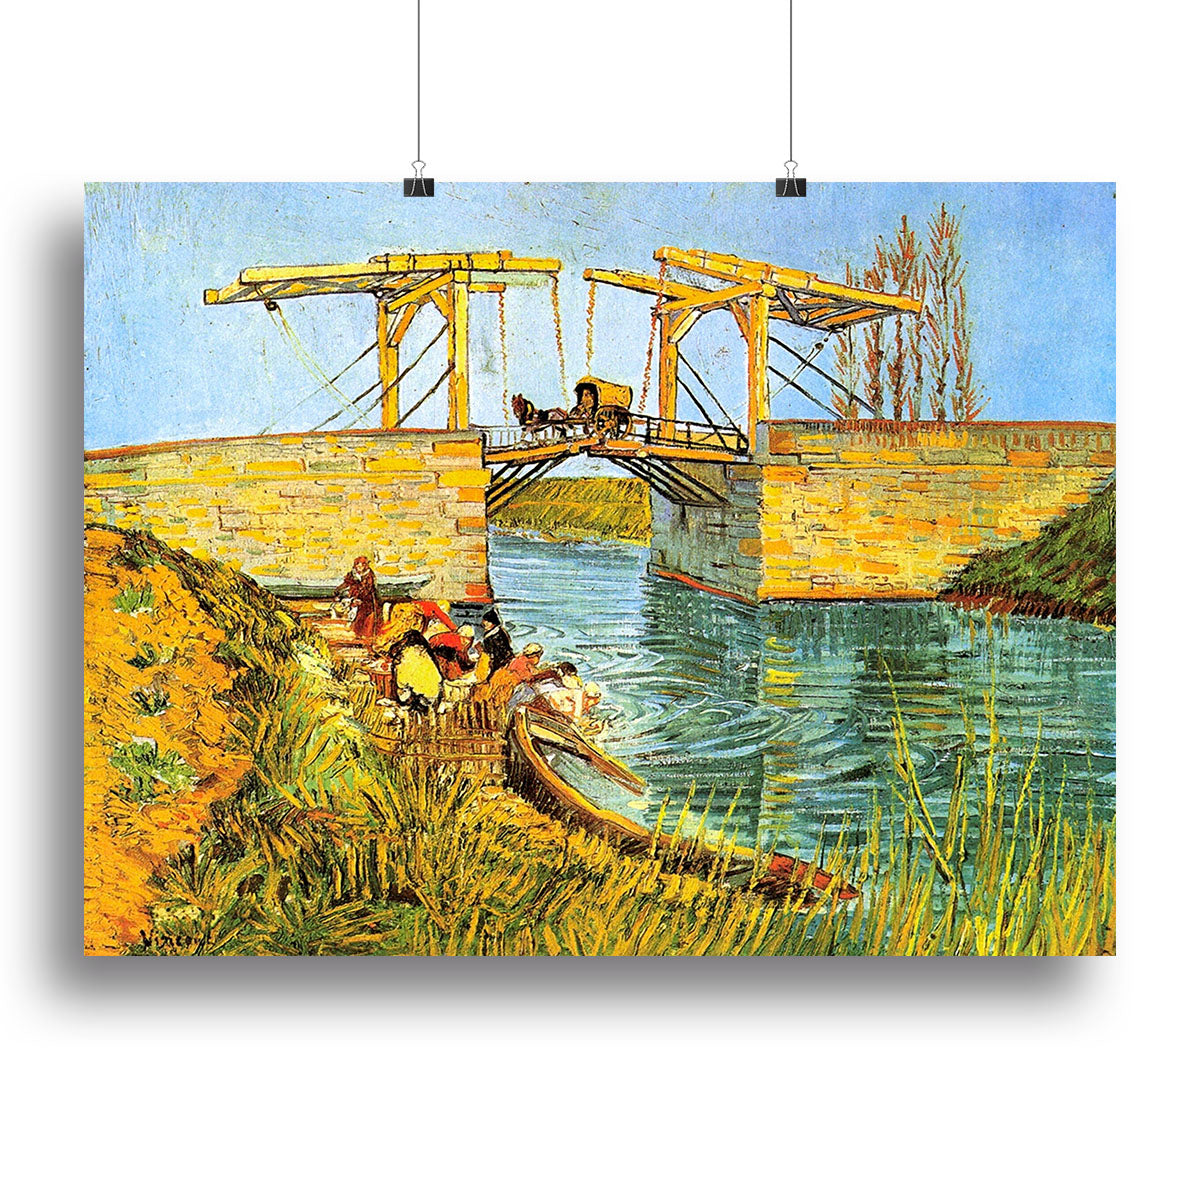 The Langlois Bridge at Arles by Van Gogh Canvas Print or Poster - Canvas Art Rocks - 2